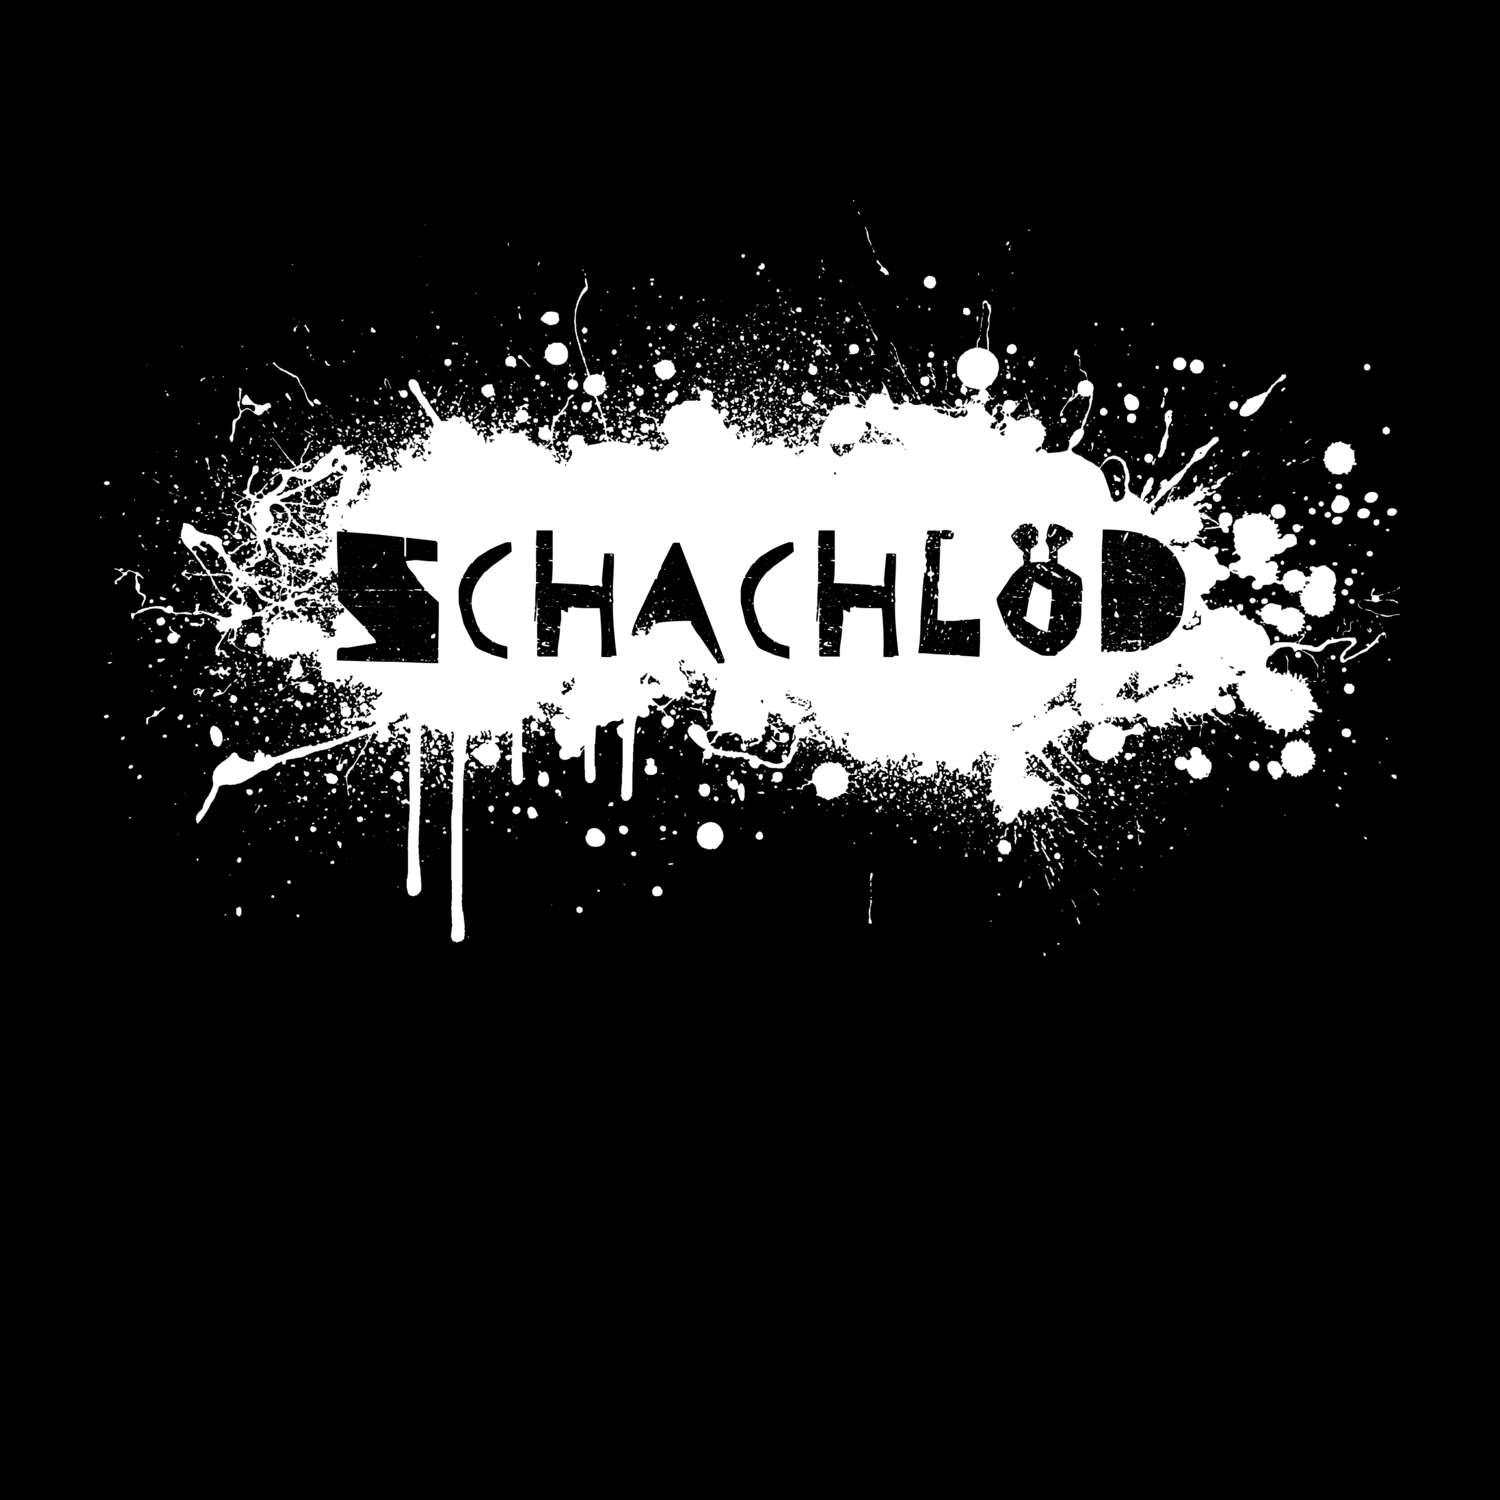 Schachlöd T-Shirt »Paint Splash Punk«